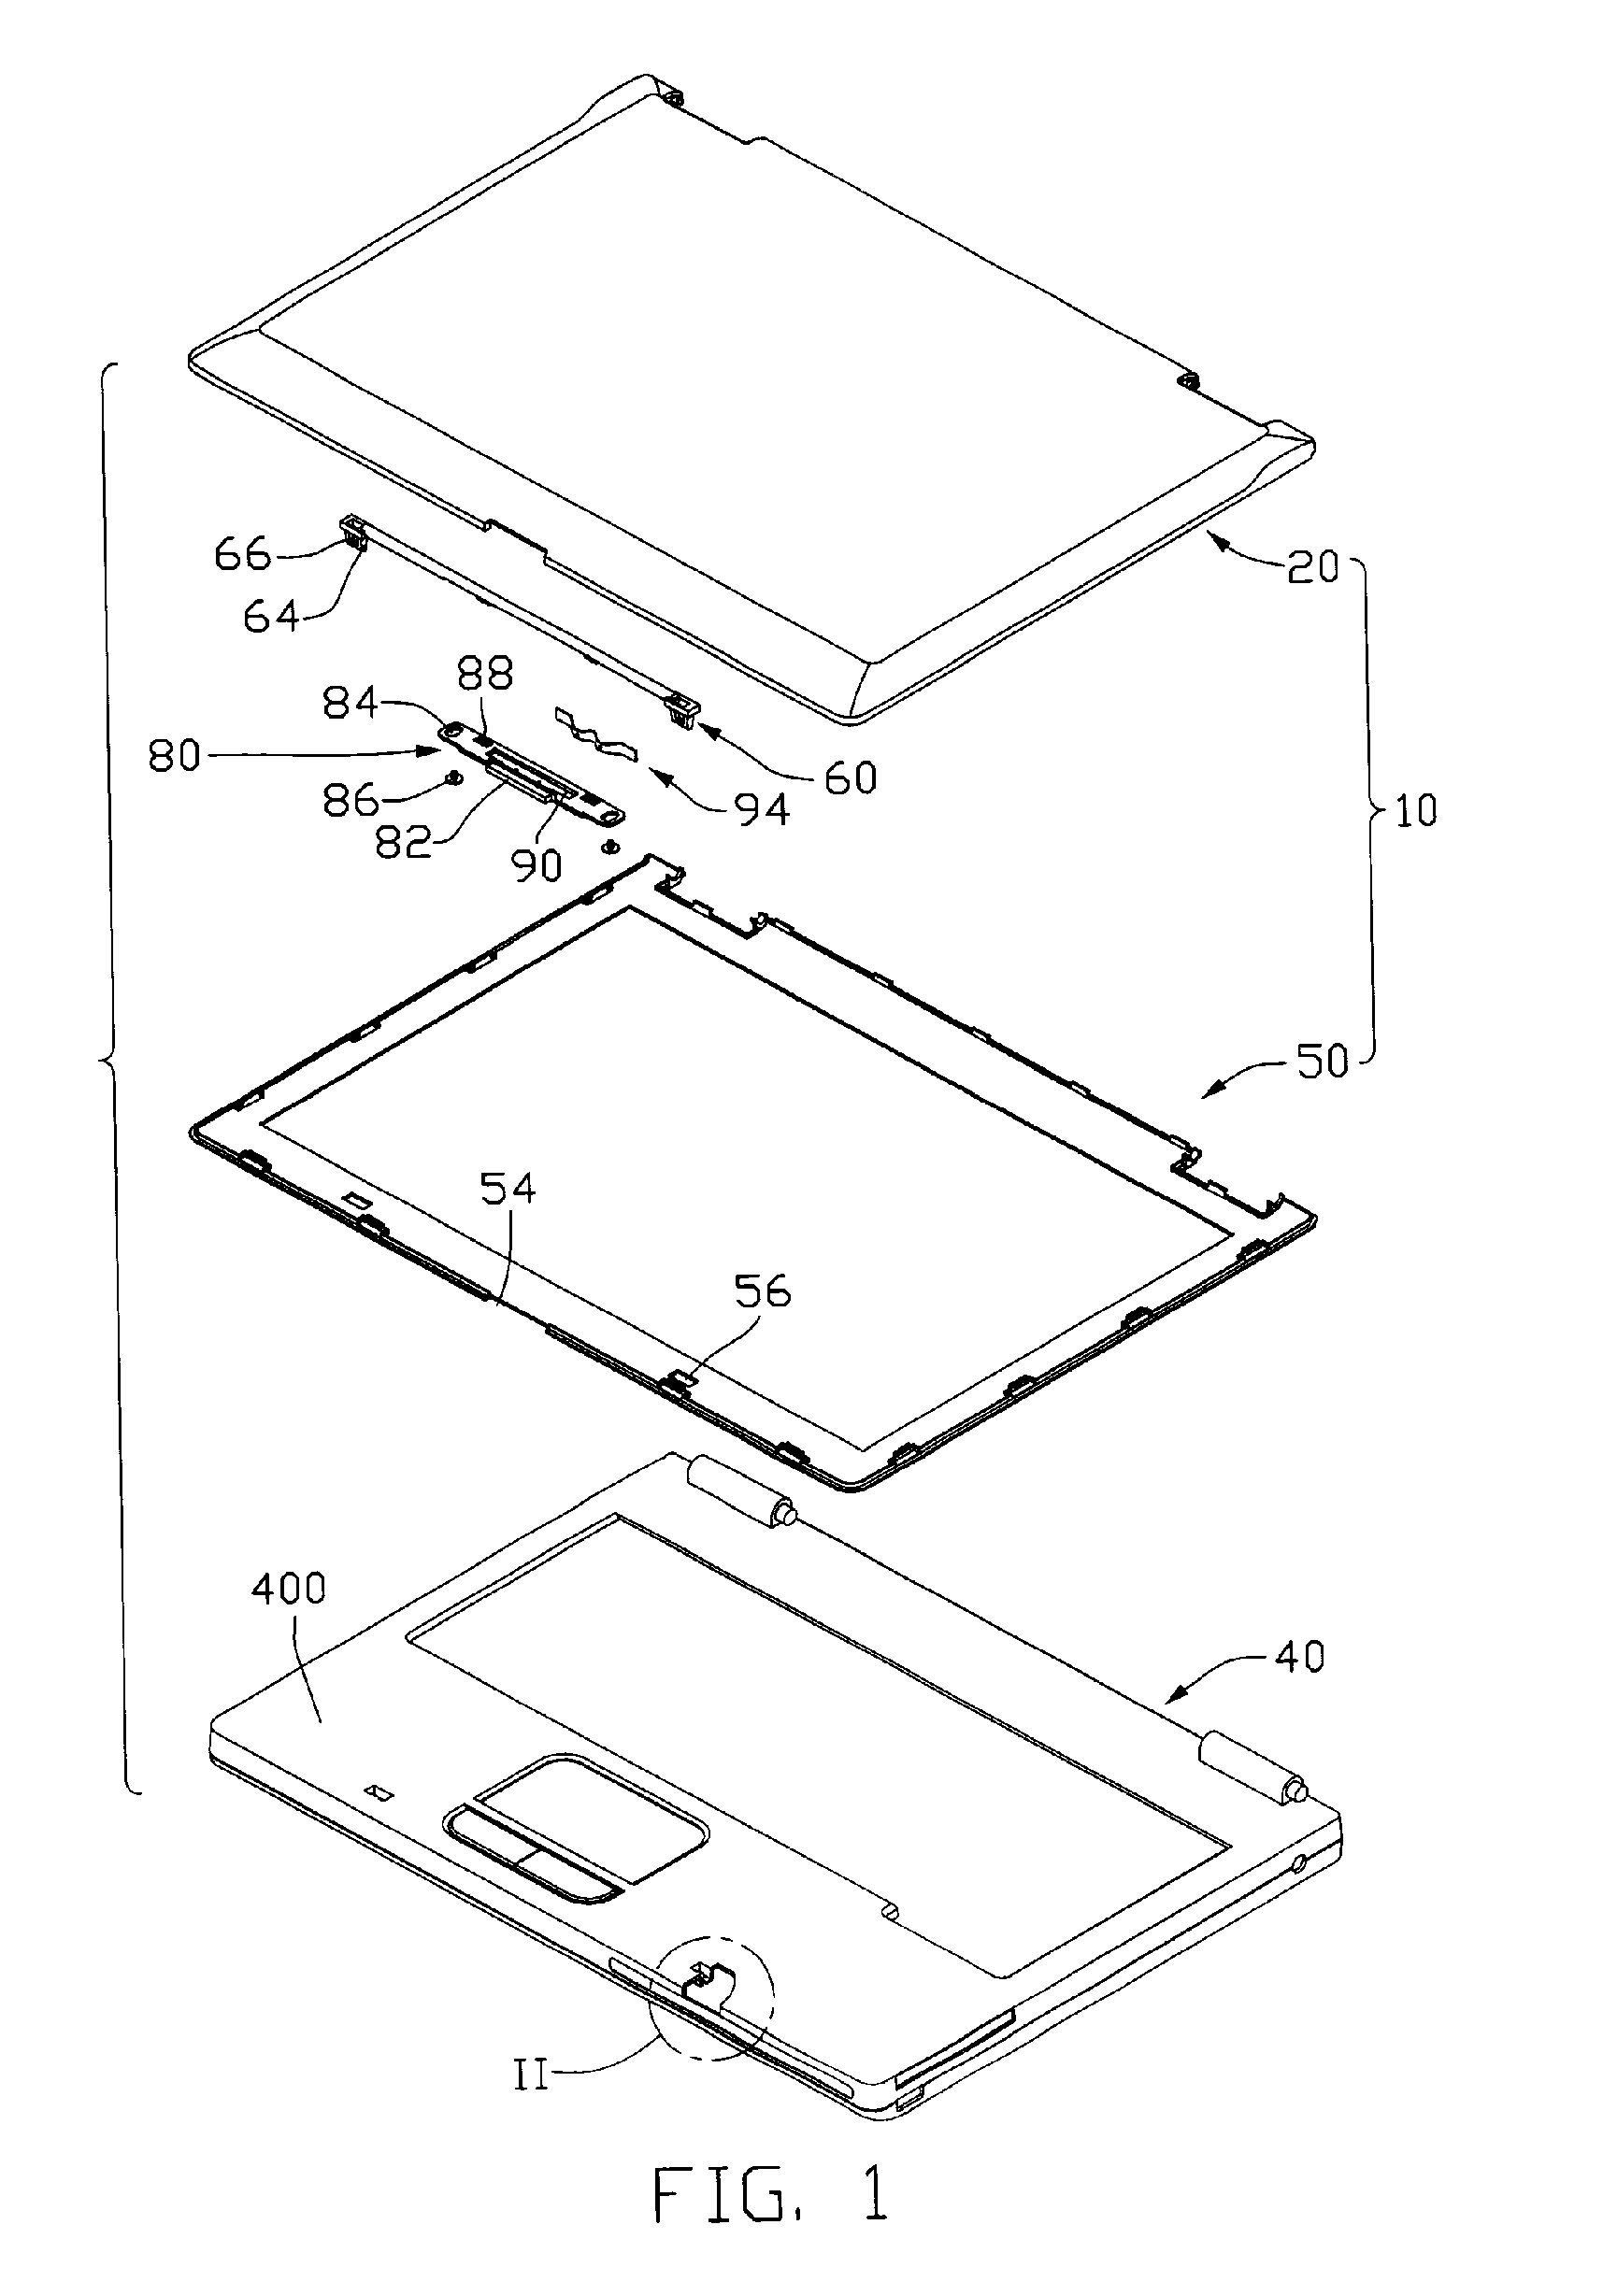 Foldable electronic device having a latch mechanism